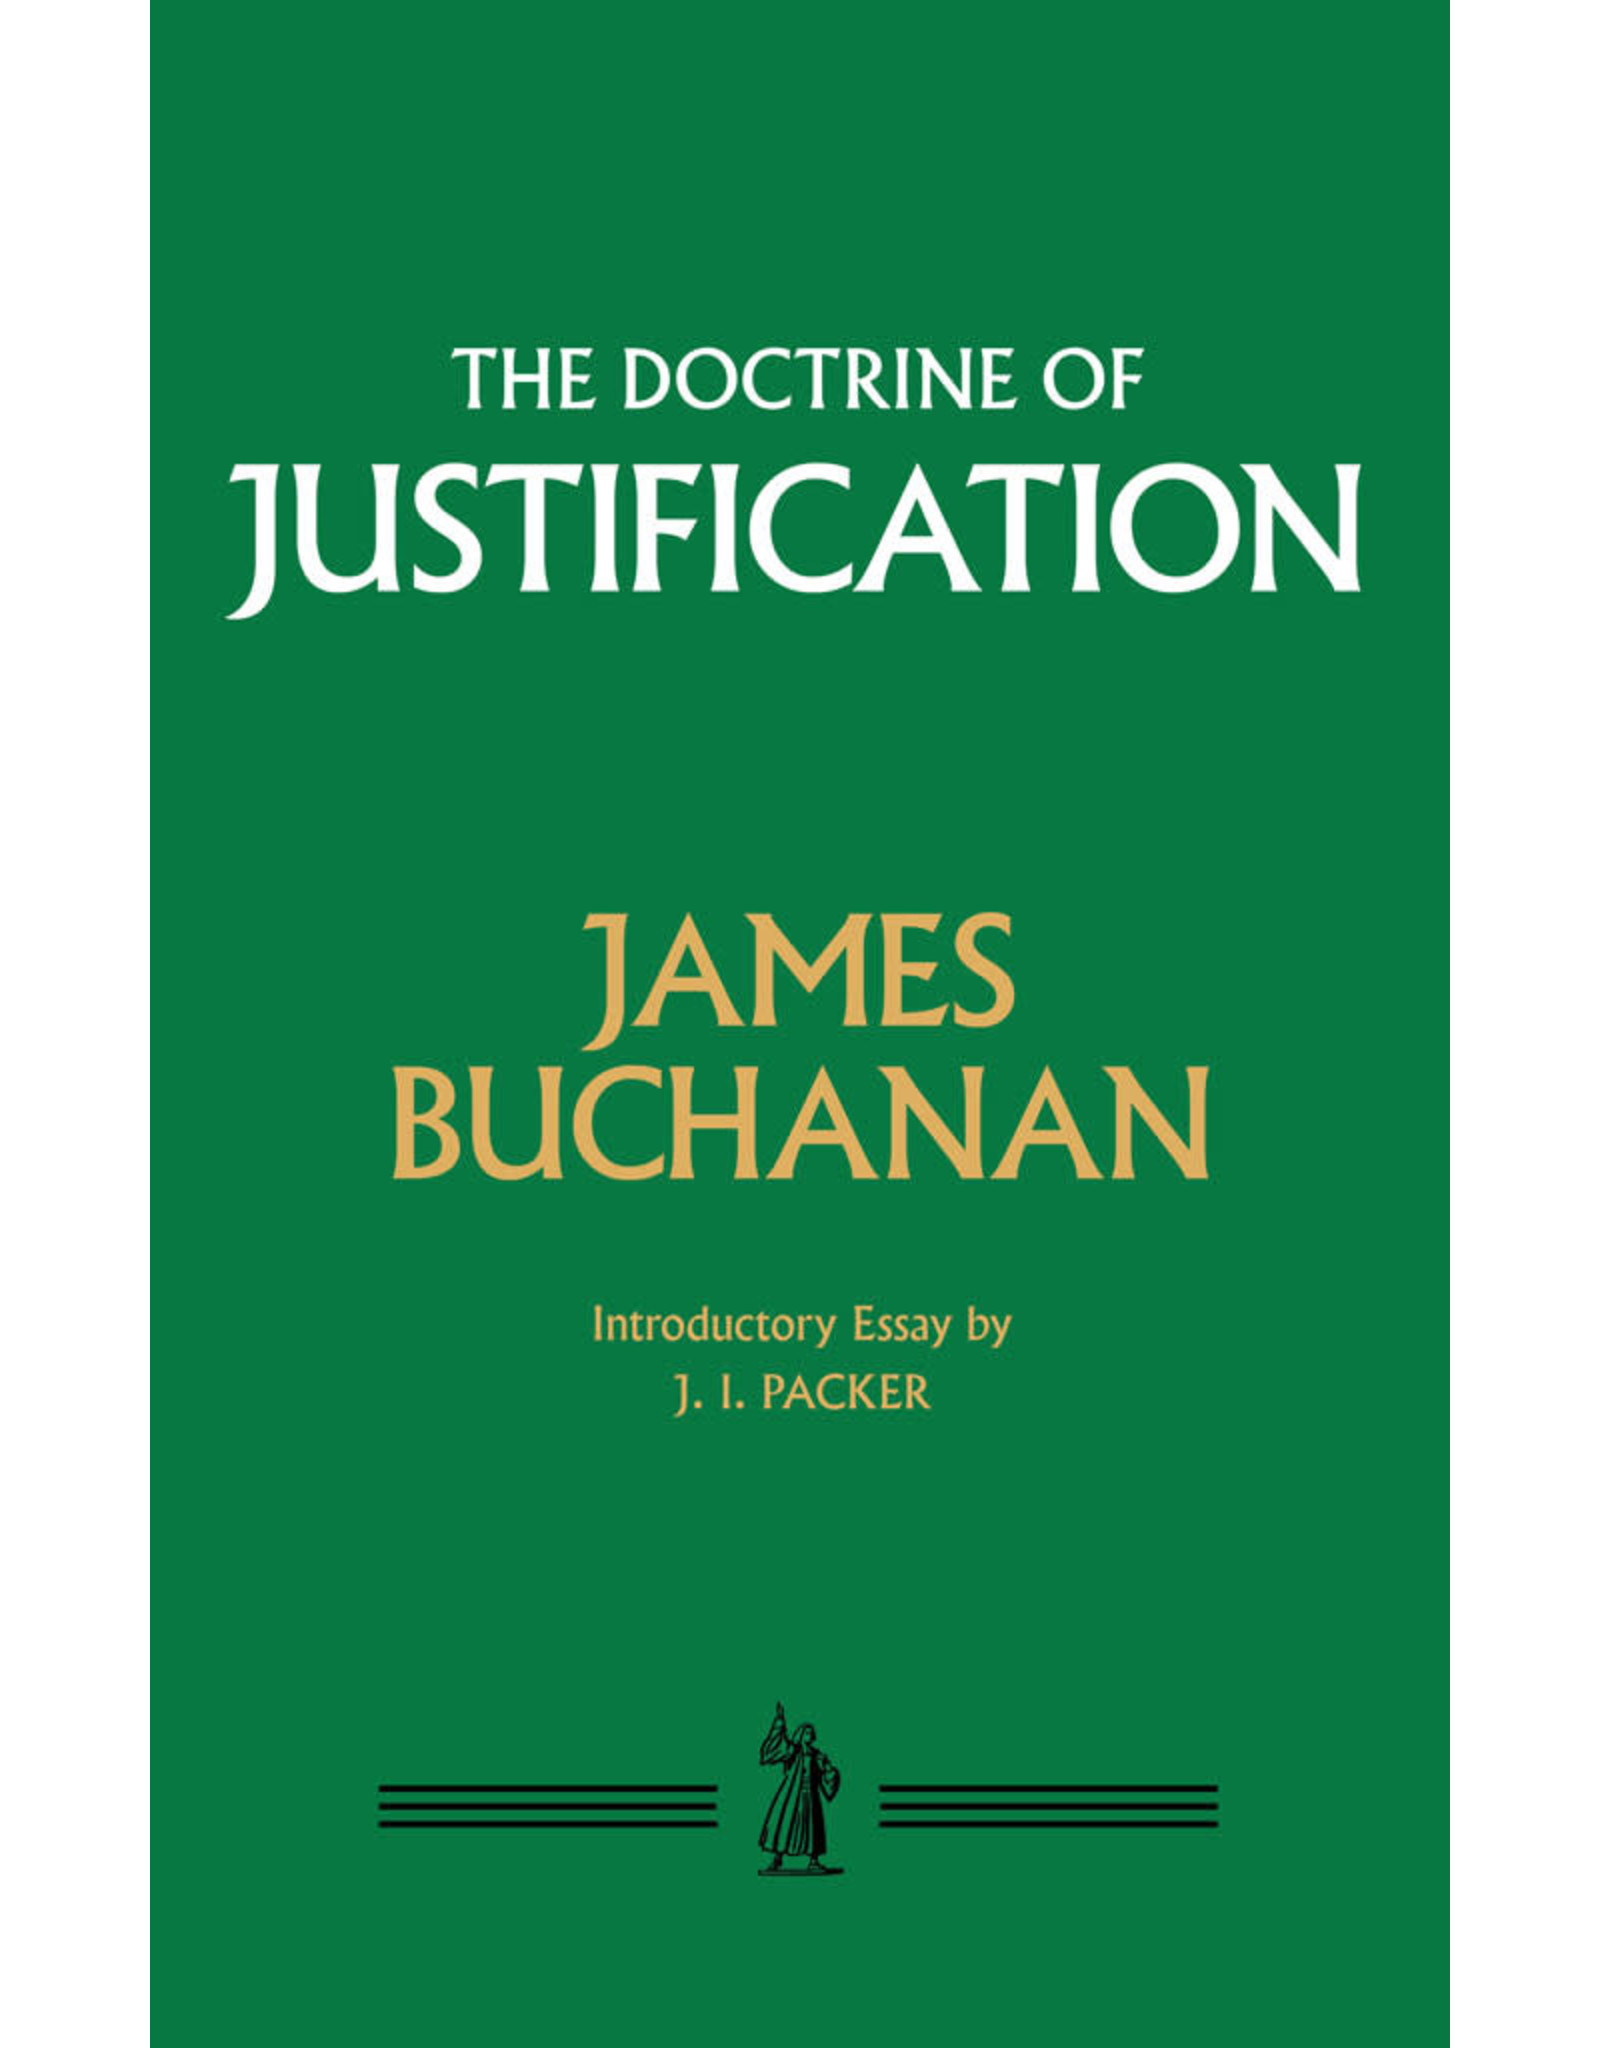 James Buchanan The Doctrine of Justification